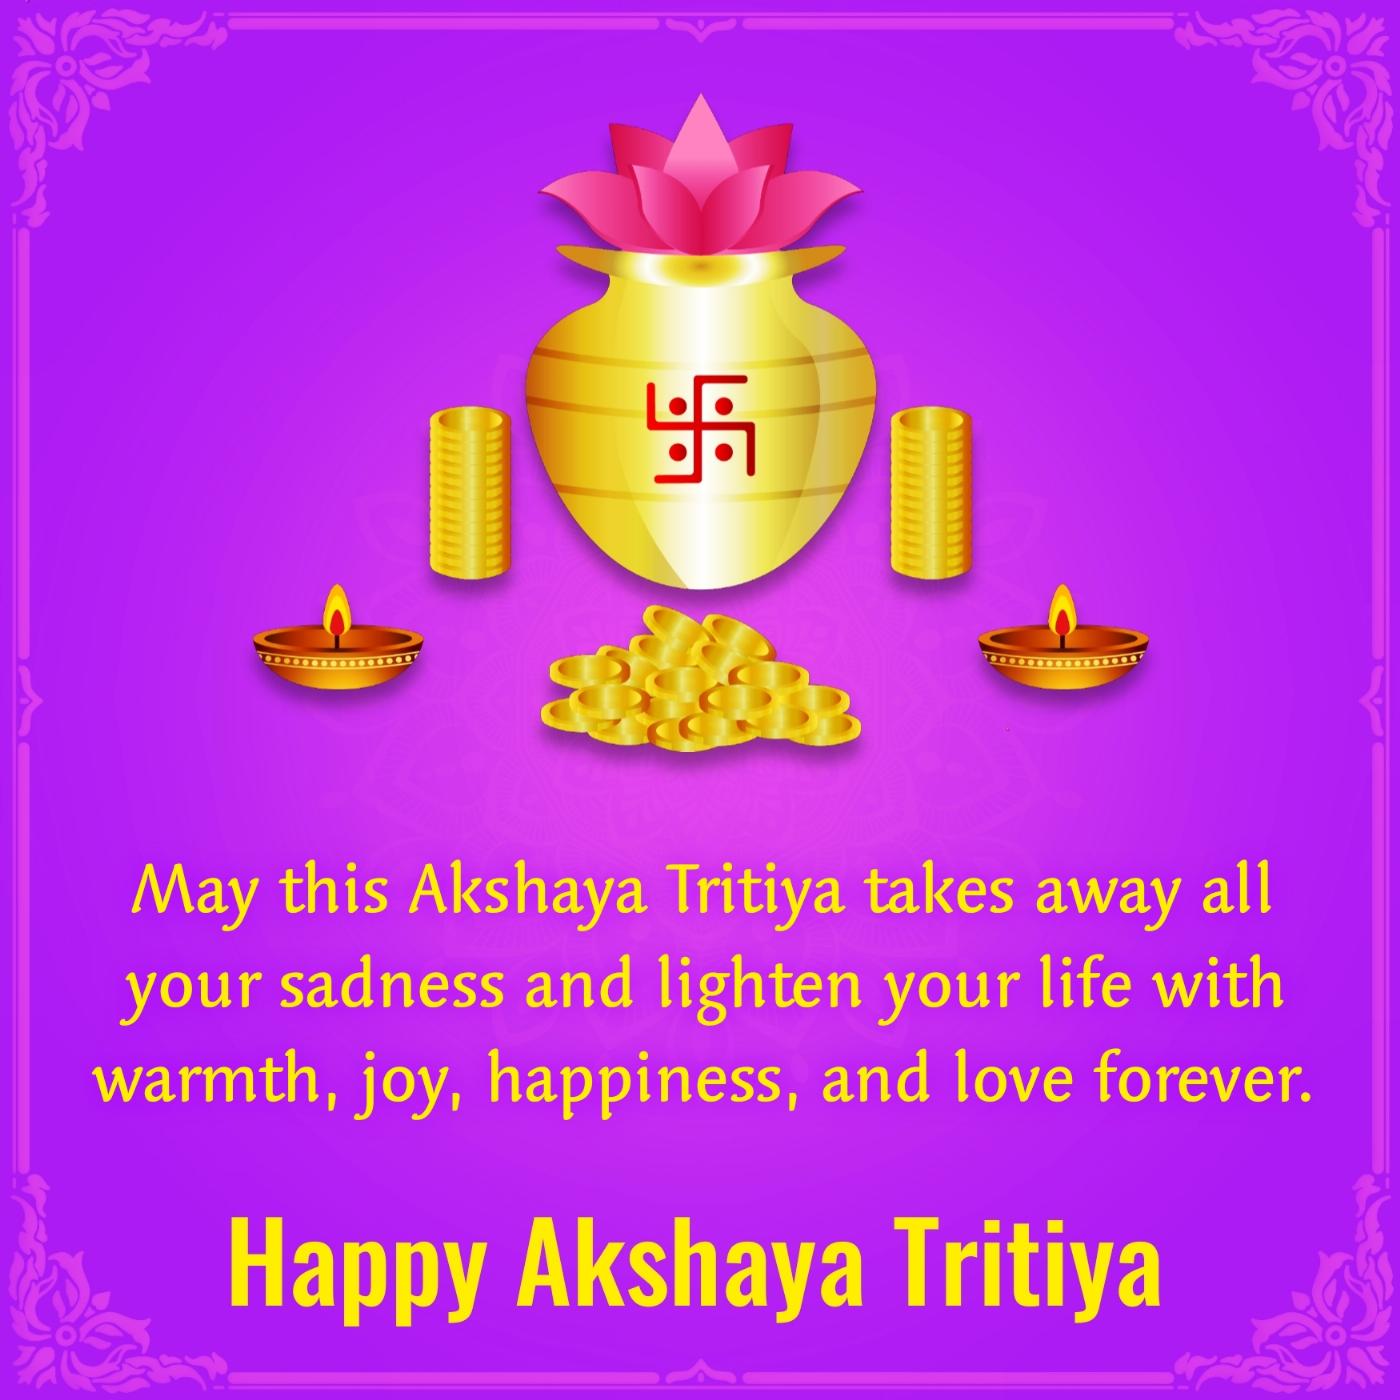 May this Akshaya Tritiya takes away all your sadness